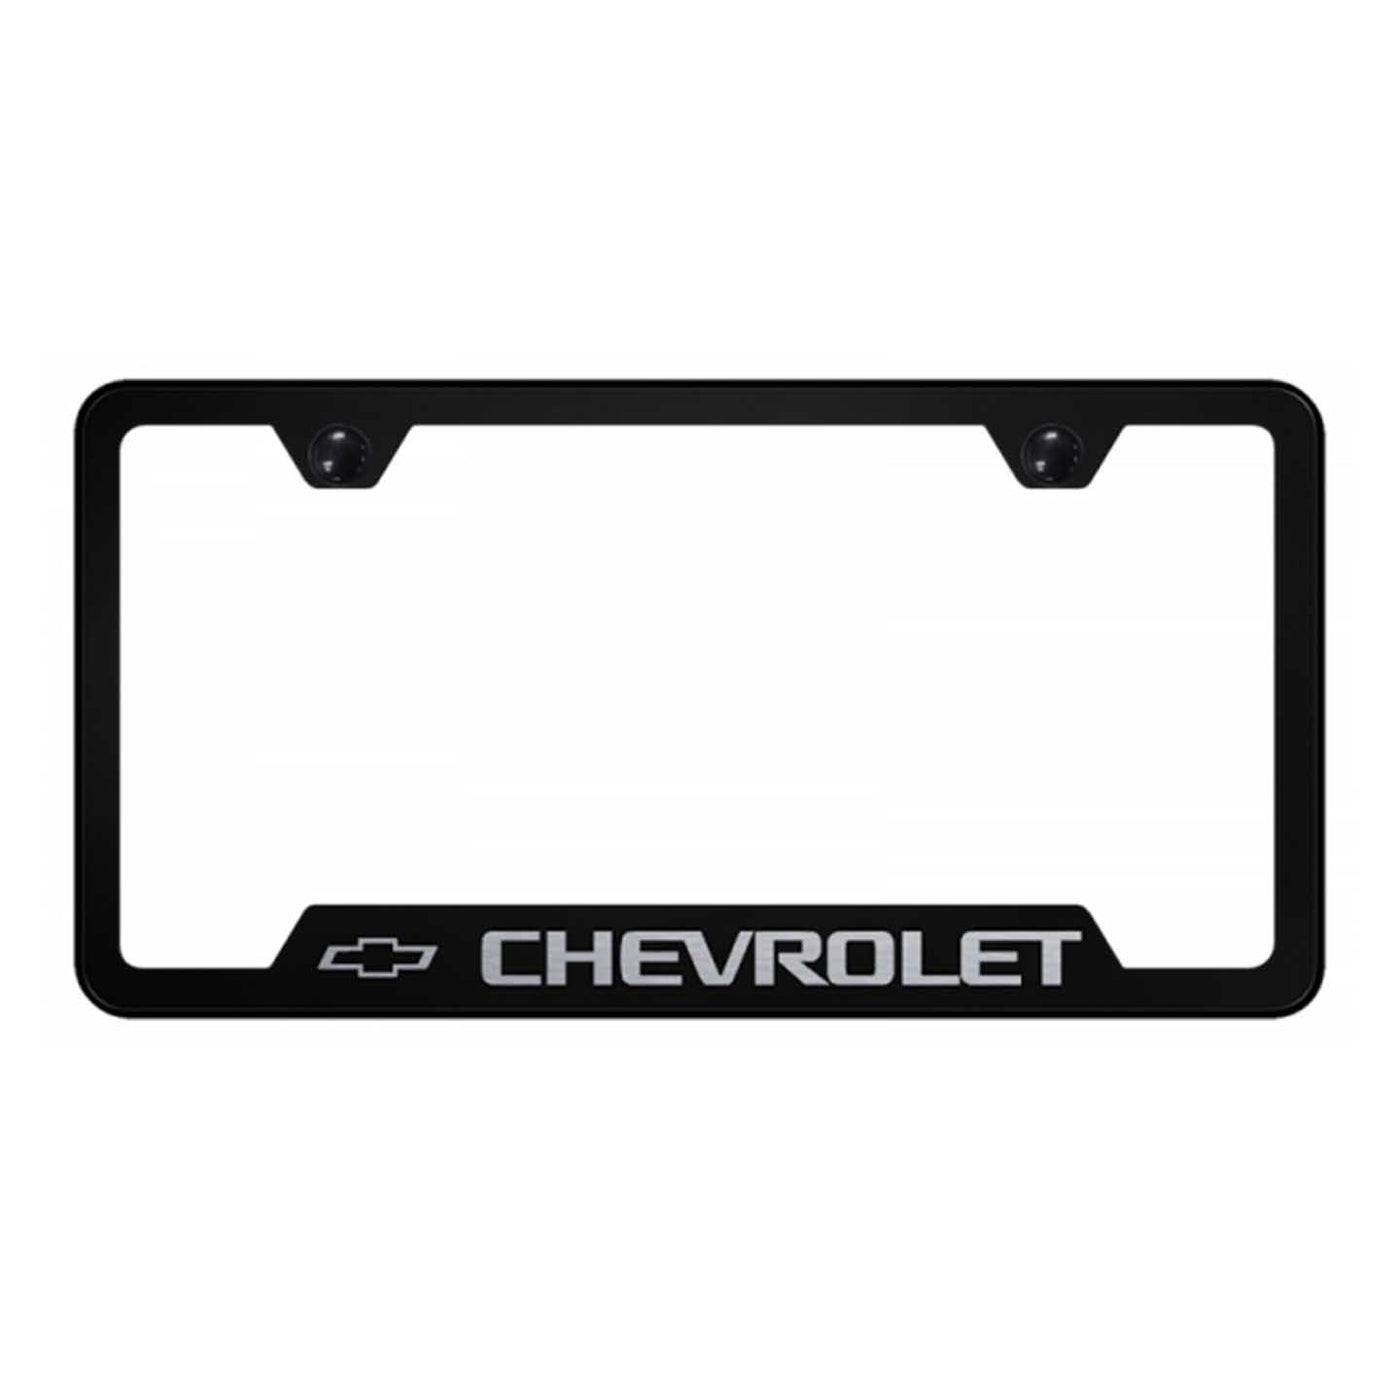 Chevrolet Stainless Steel Frame - Laser Etched Black